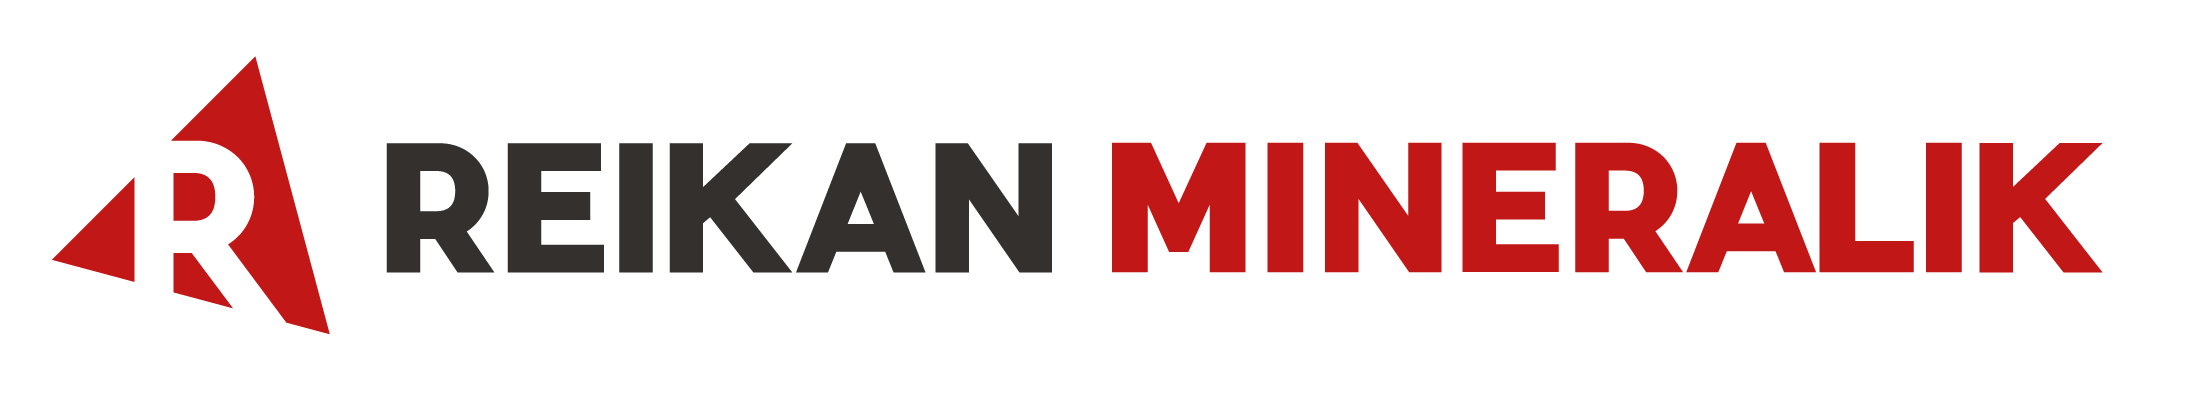 Logo REIKAN MINERALIK_Standard